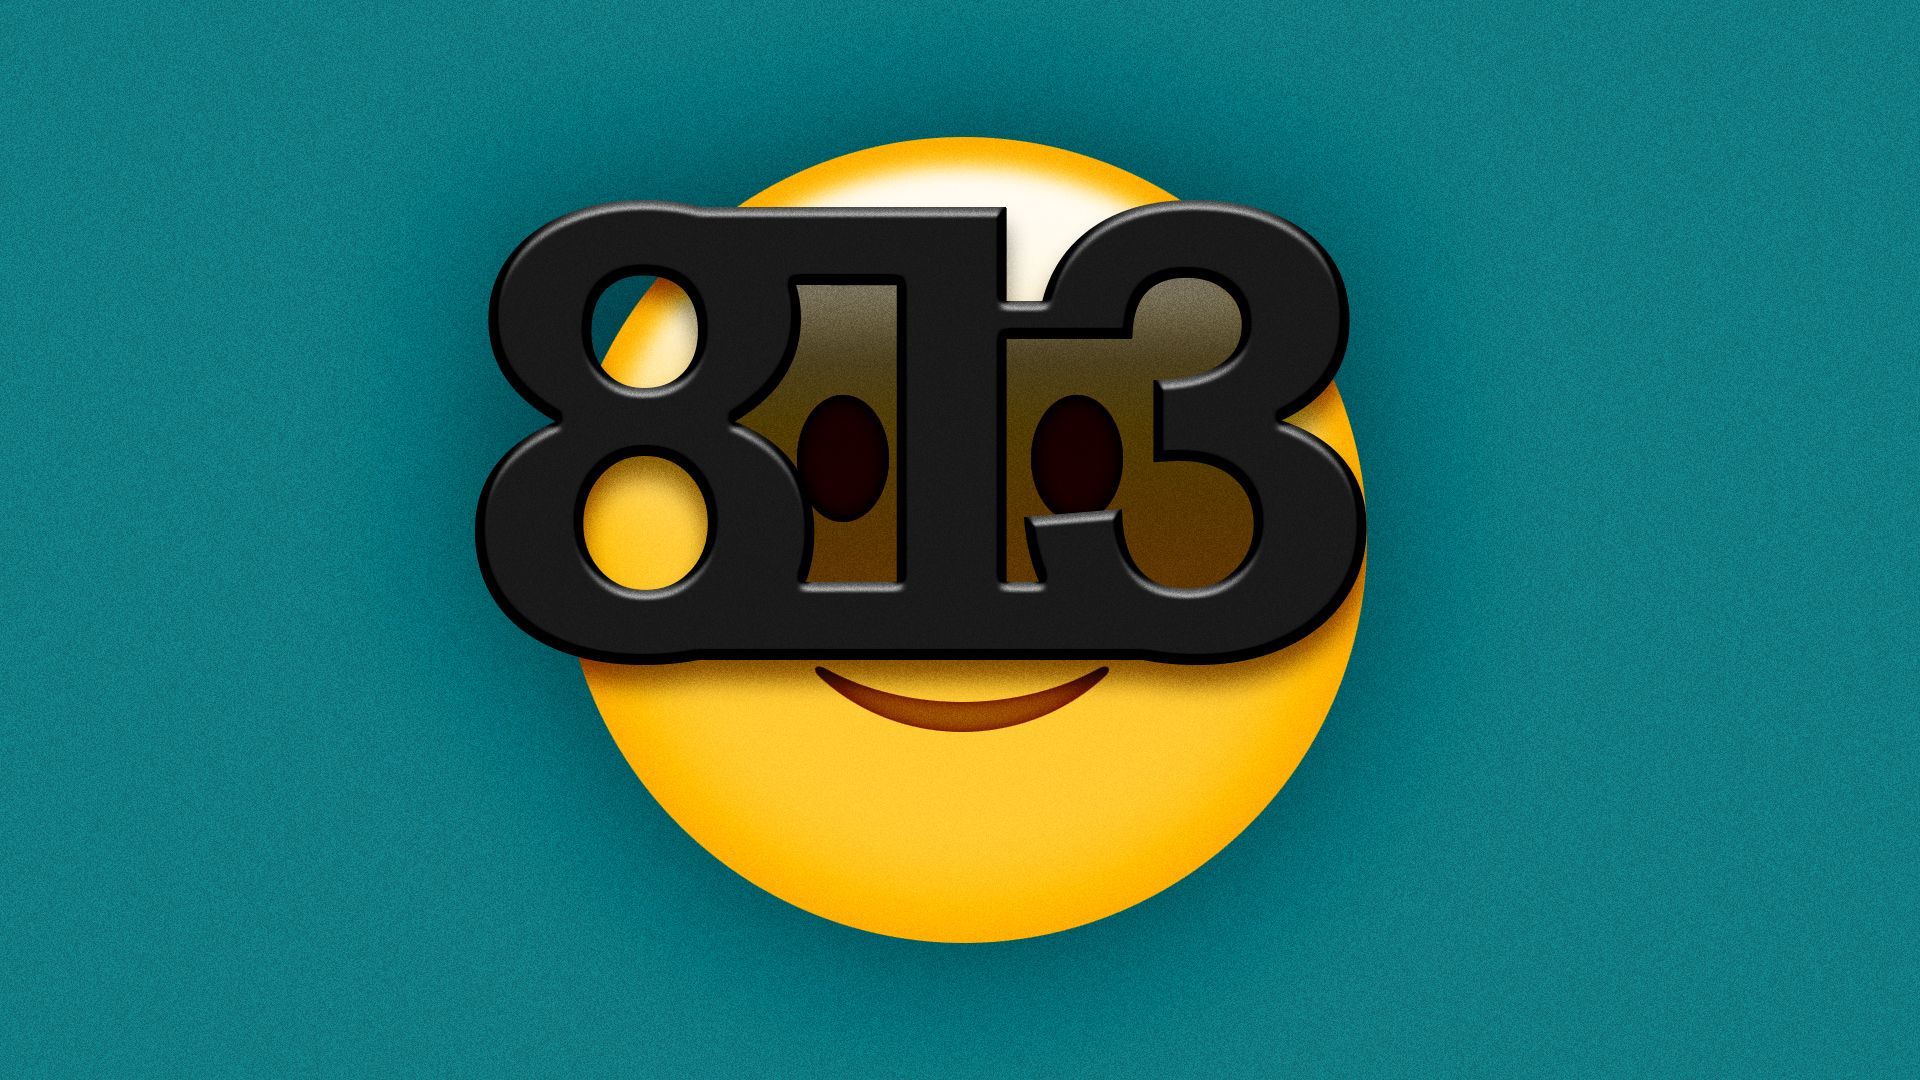 Illustration of an emoji wearing sunglasses shaped like "813."